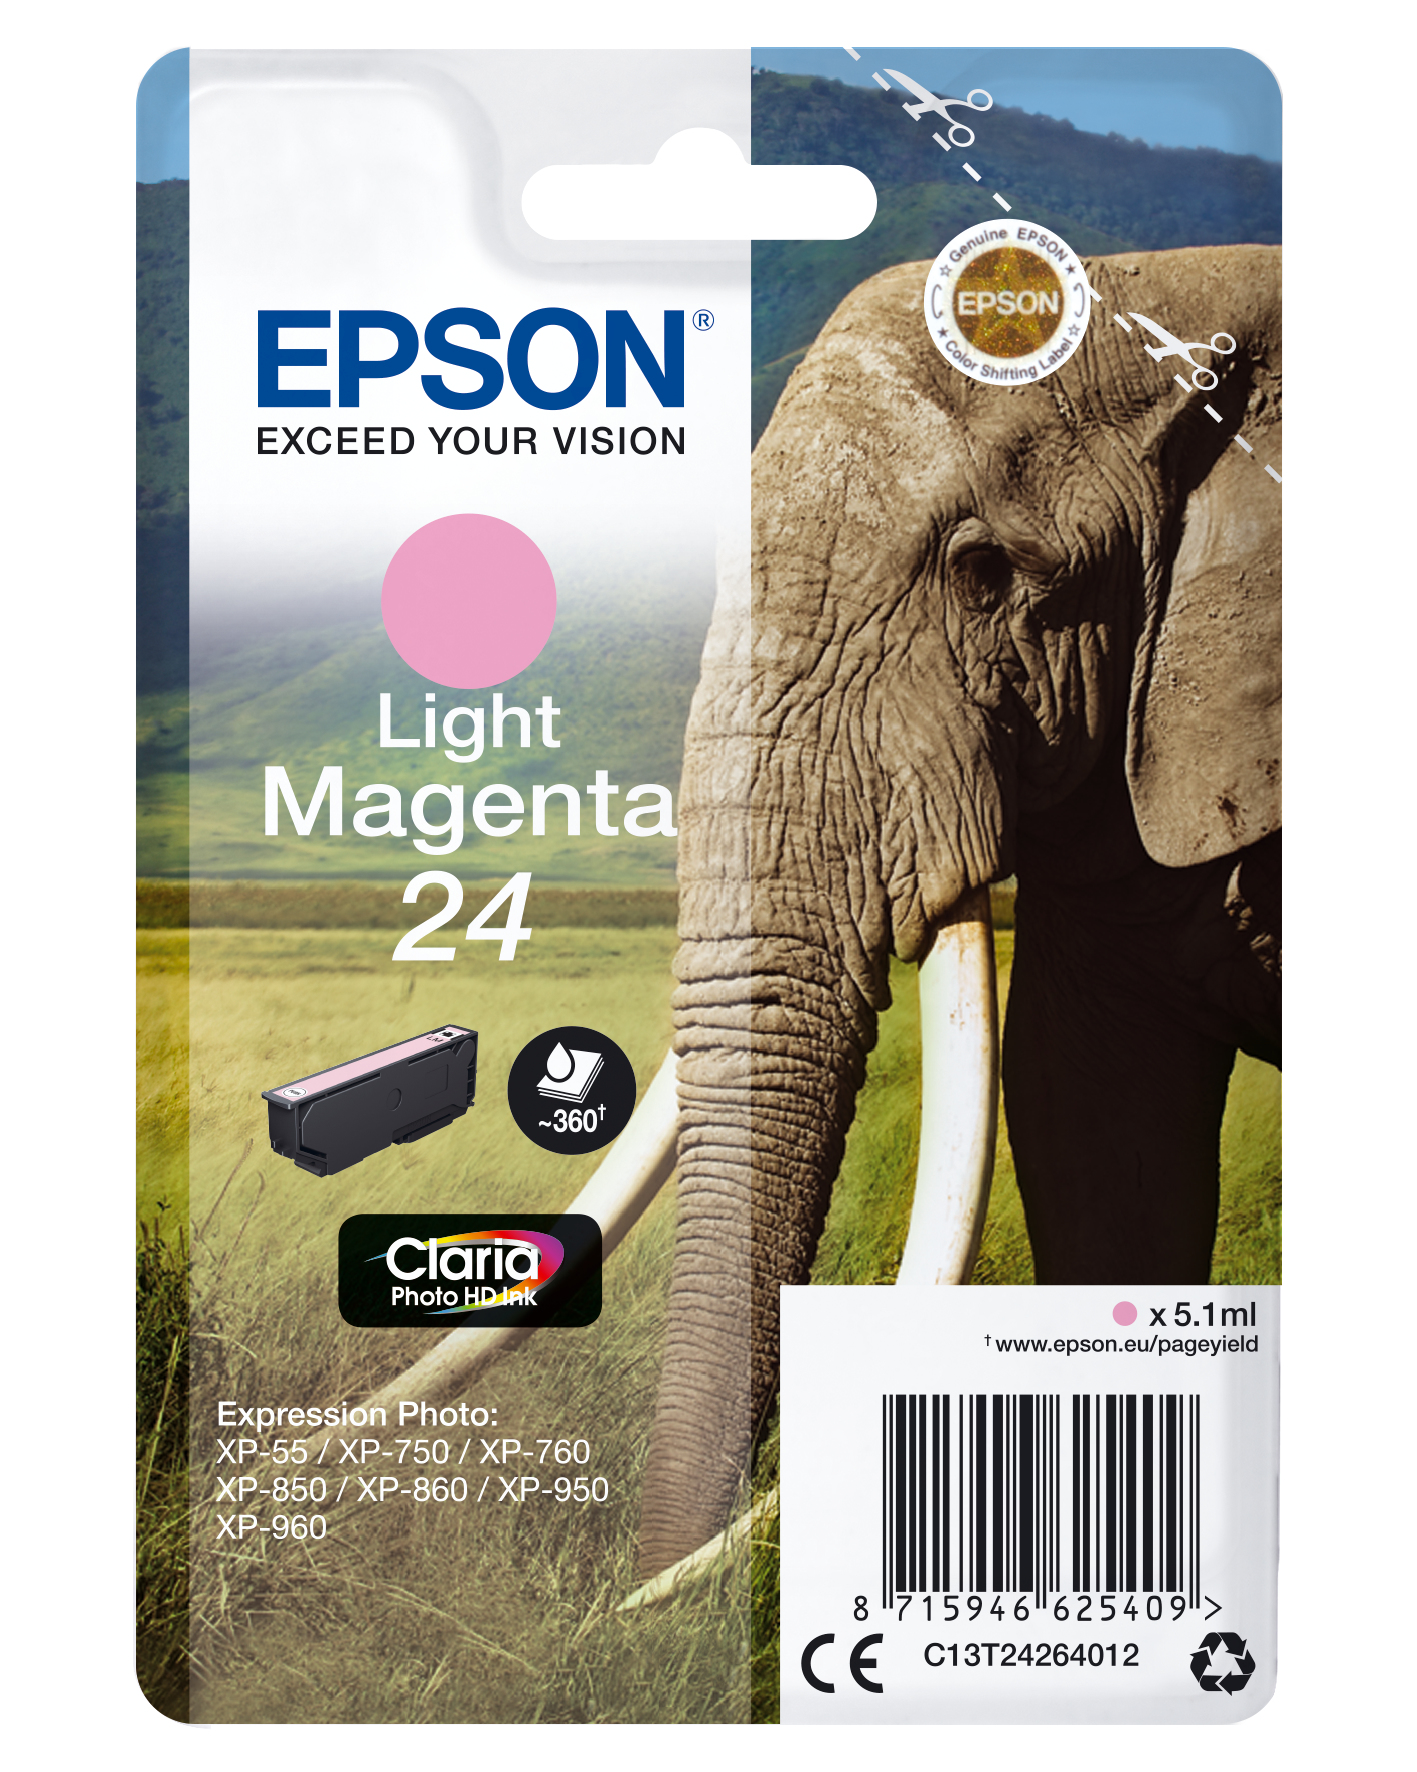 Epson Elephant Enpack ljus magenta 24 Claria Photo HD-bläck